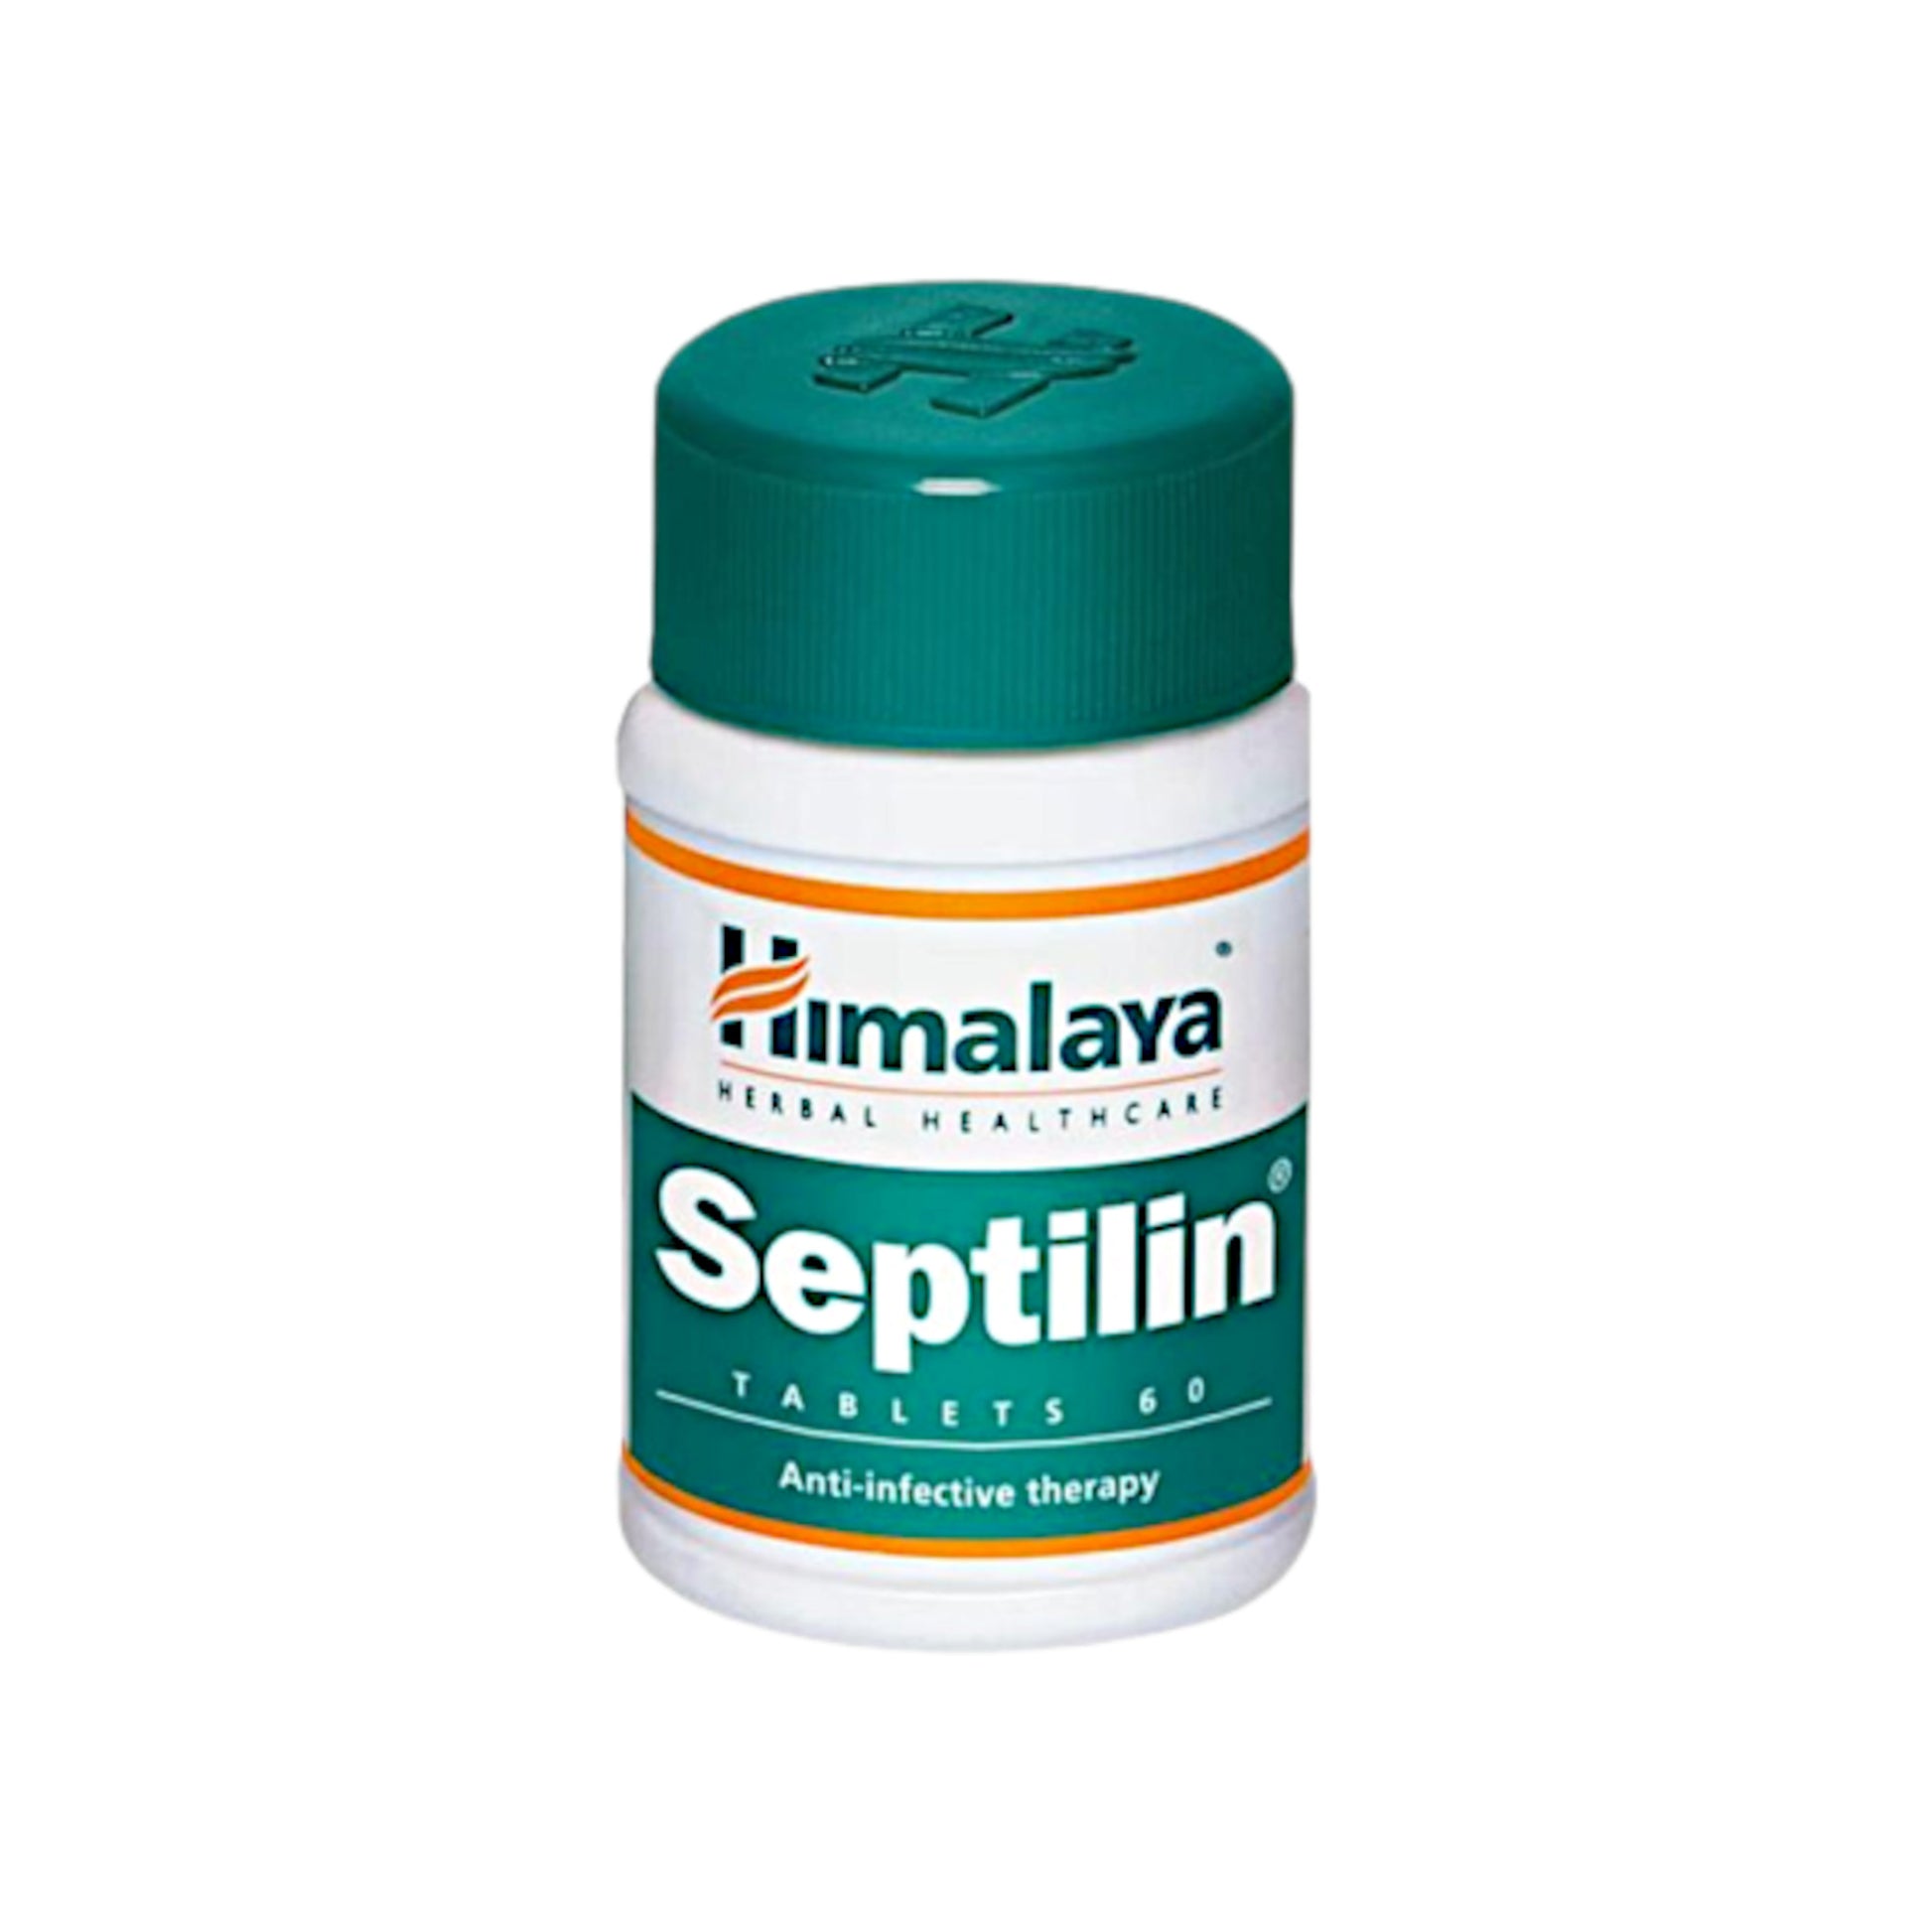 Image: Himalaya Septilin/Immunocare 60 Tablets - Supports immune function and antibody production.